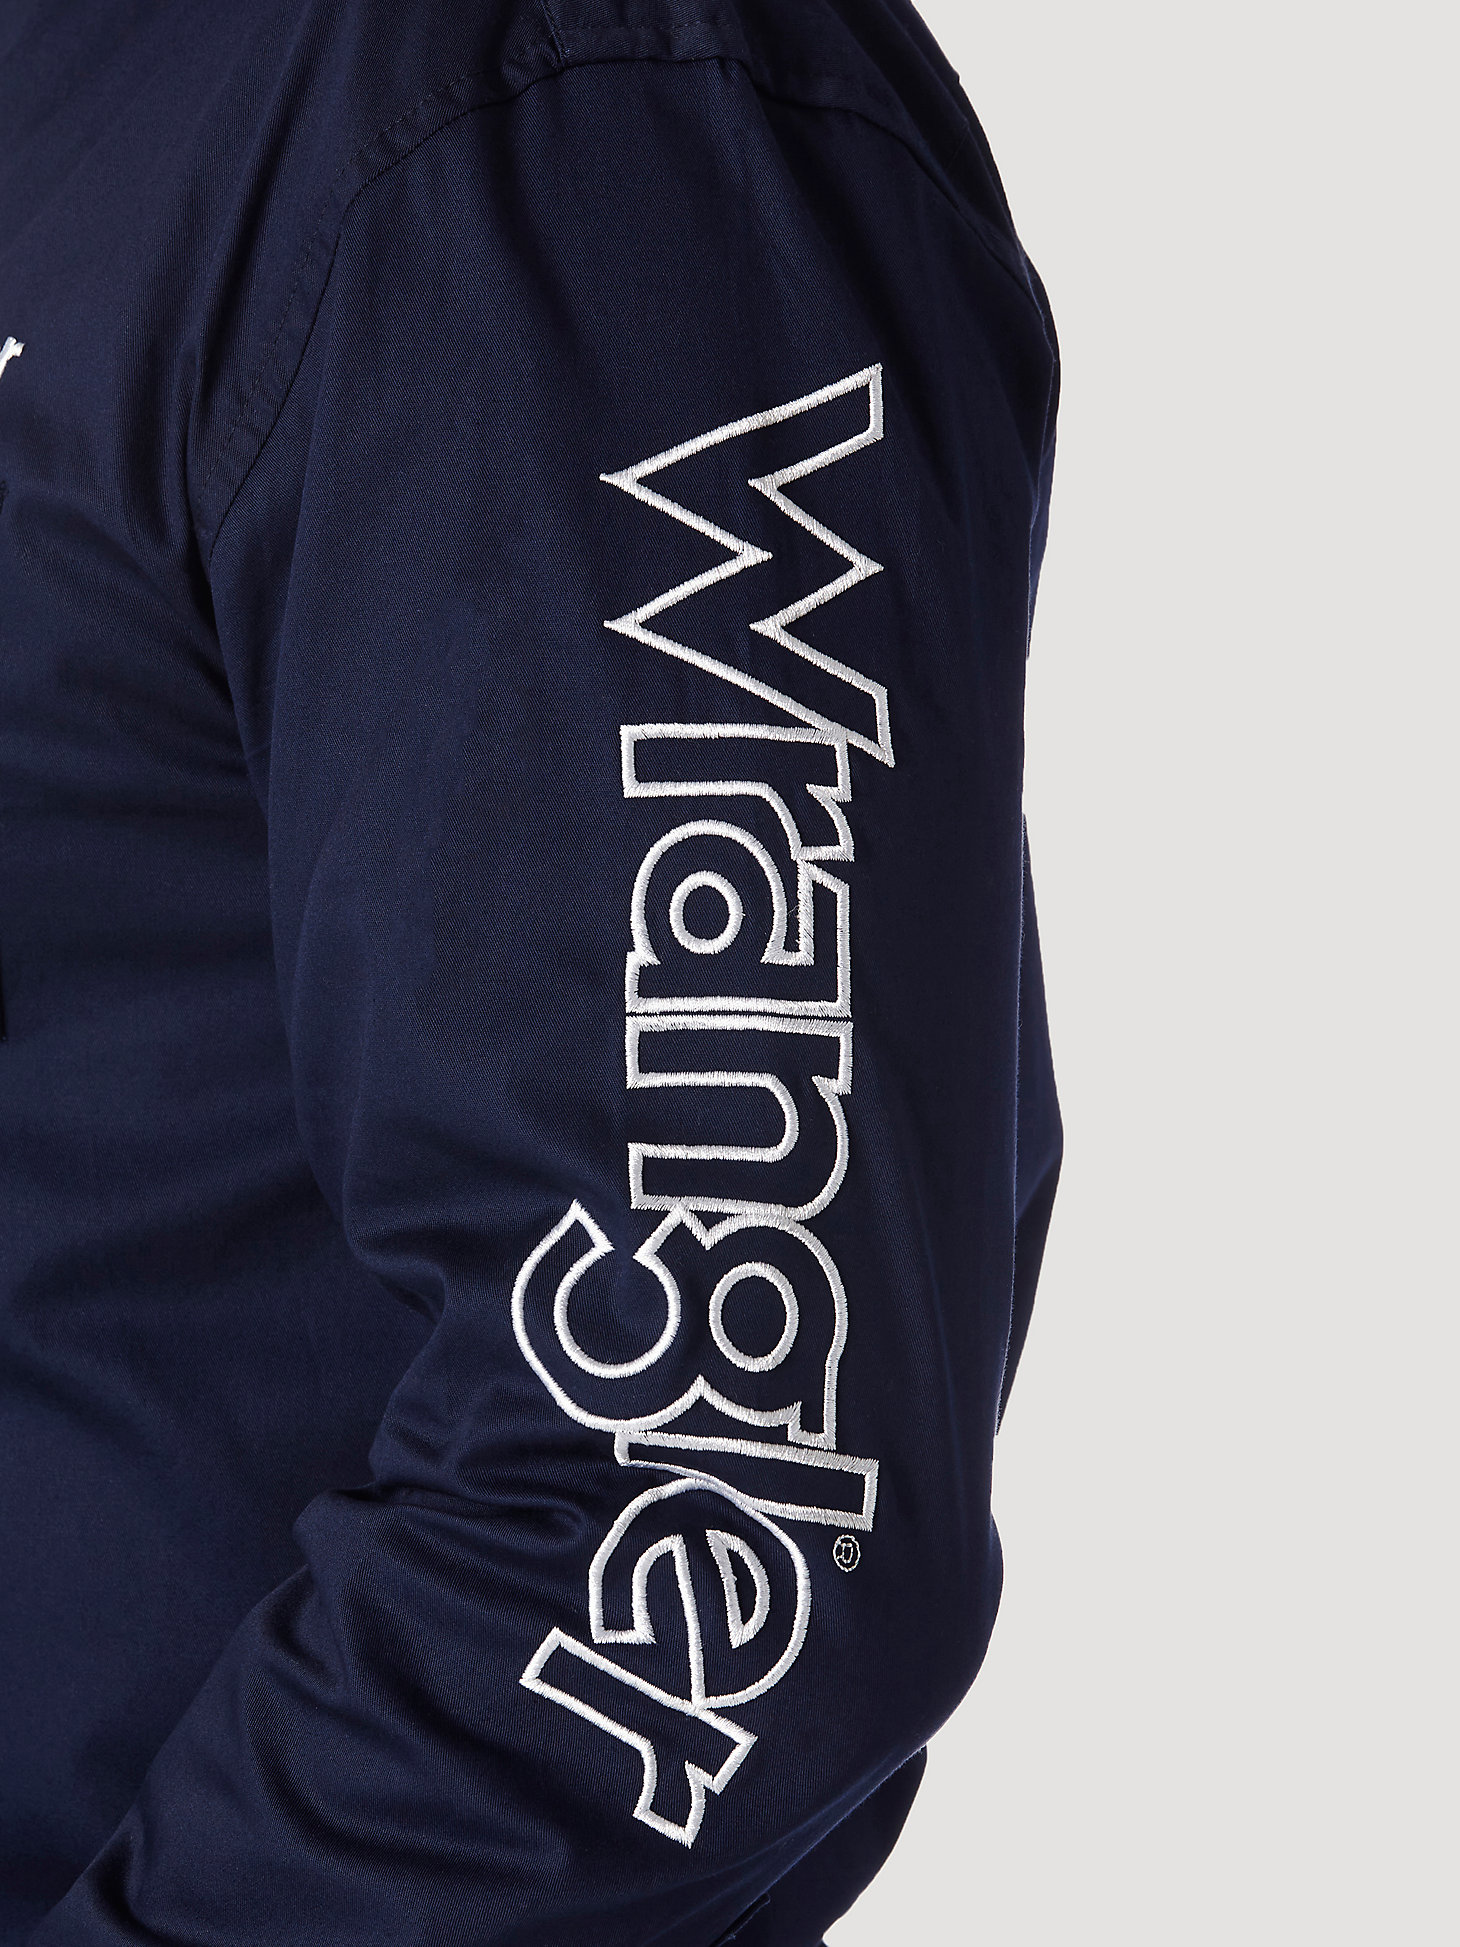 Men's Wrangler® Logo Long Sleeve Button Down Solid Shirt in Navy alternative view 5